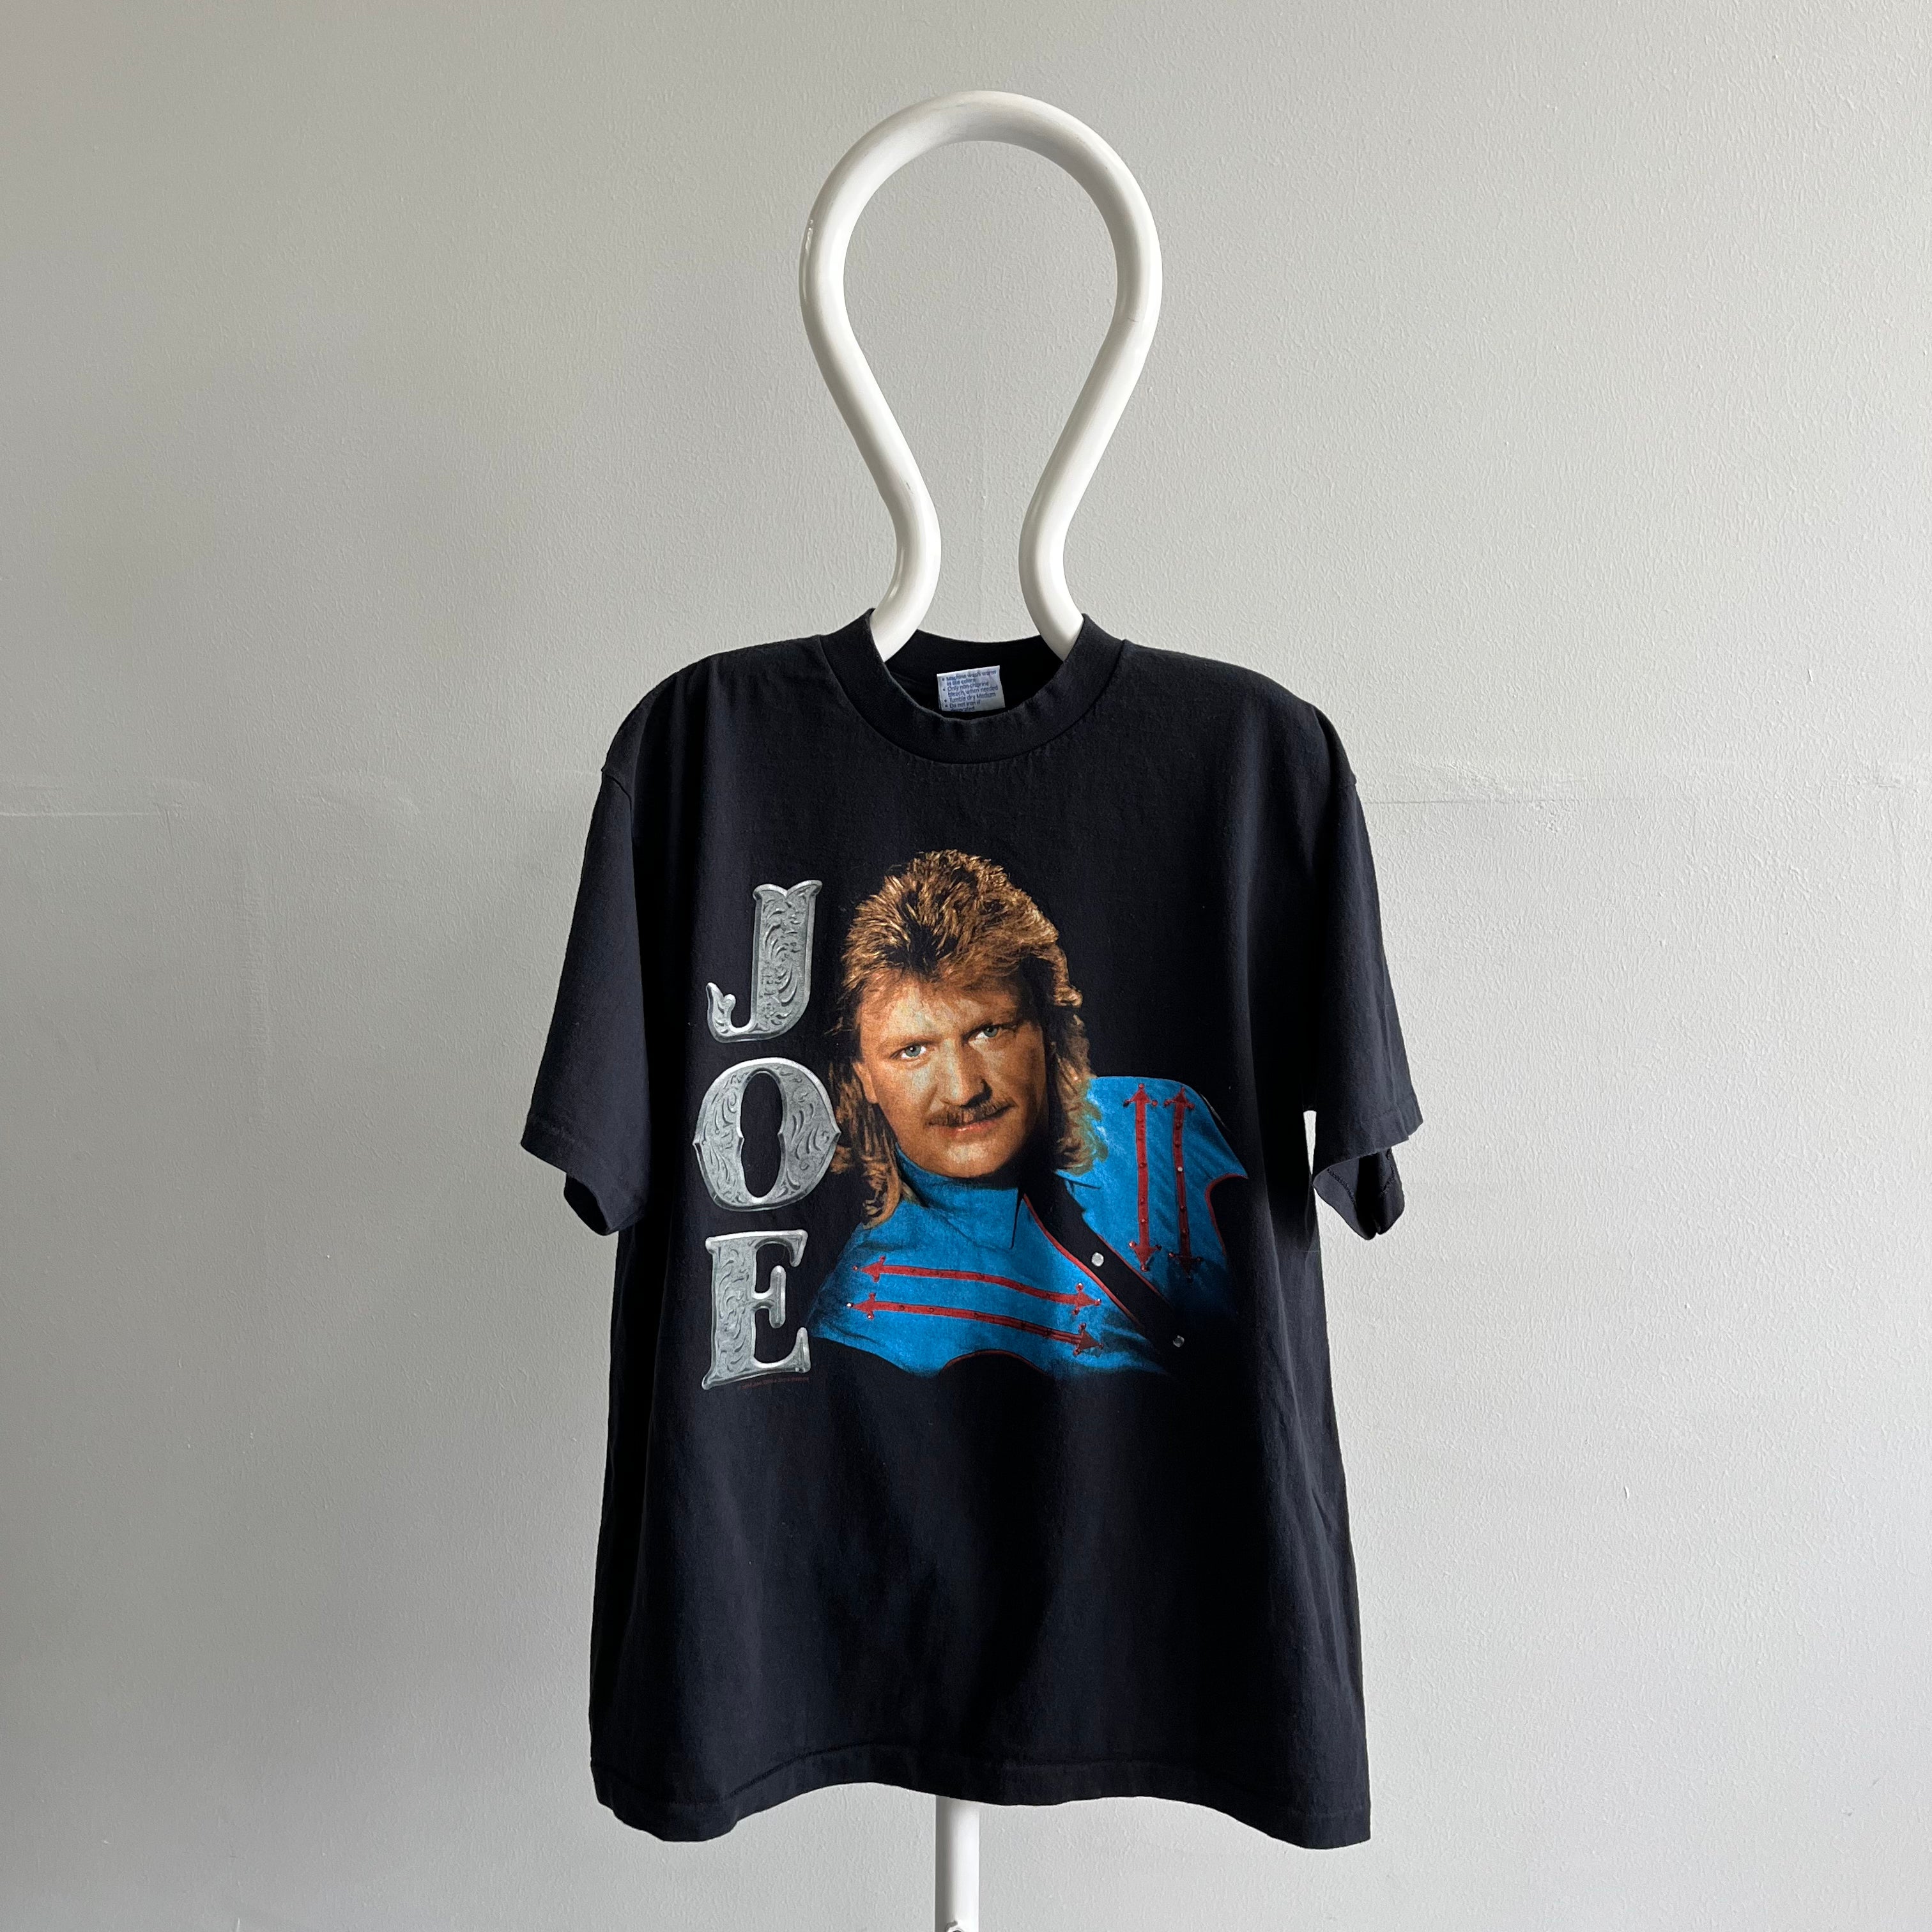 1994 Joe Diffie Killer Mullet Front and Back T-Shirt